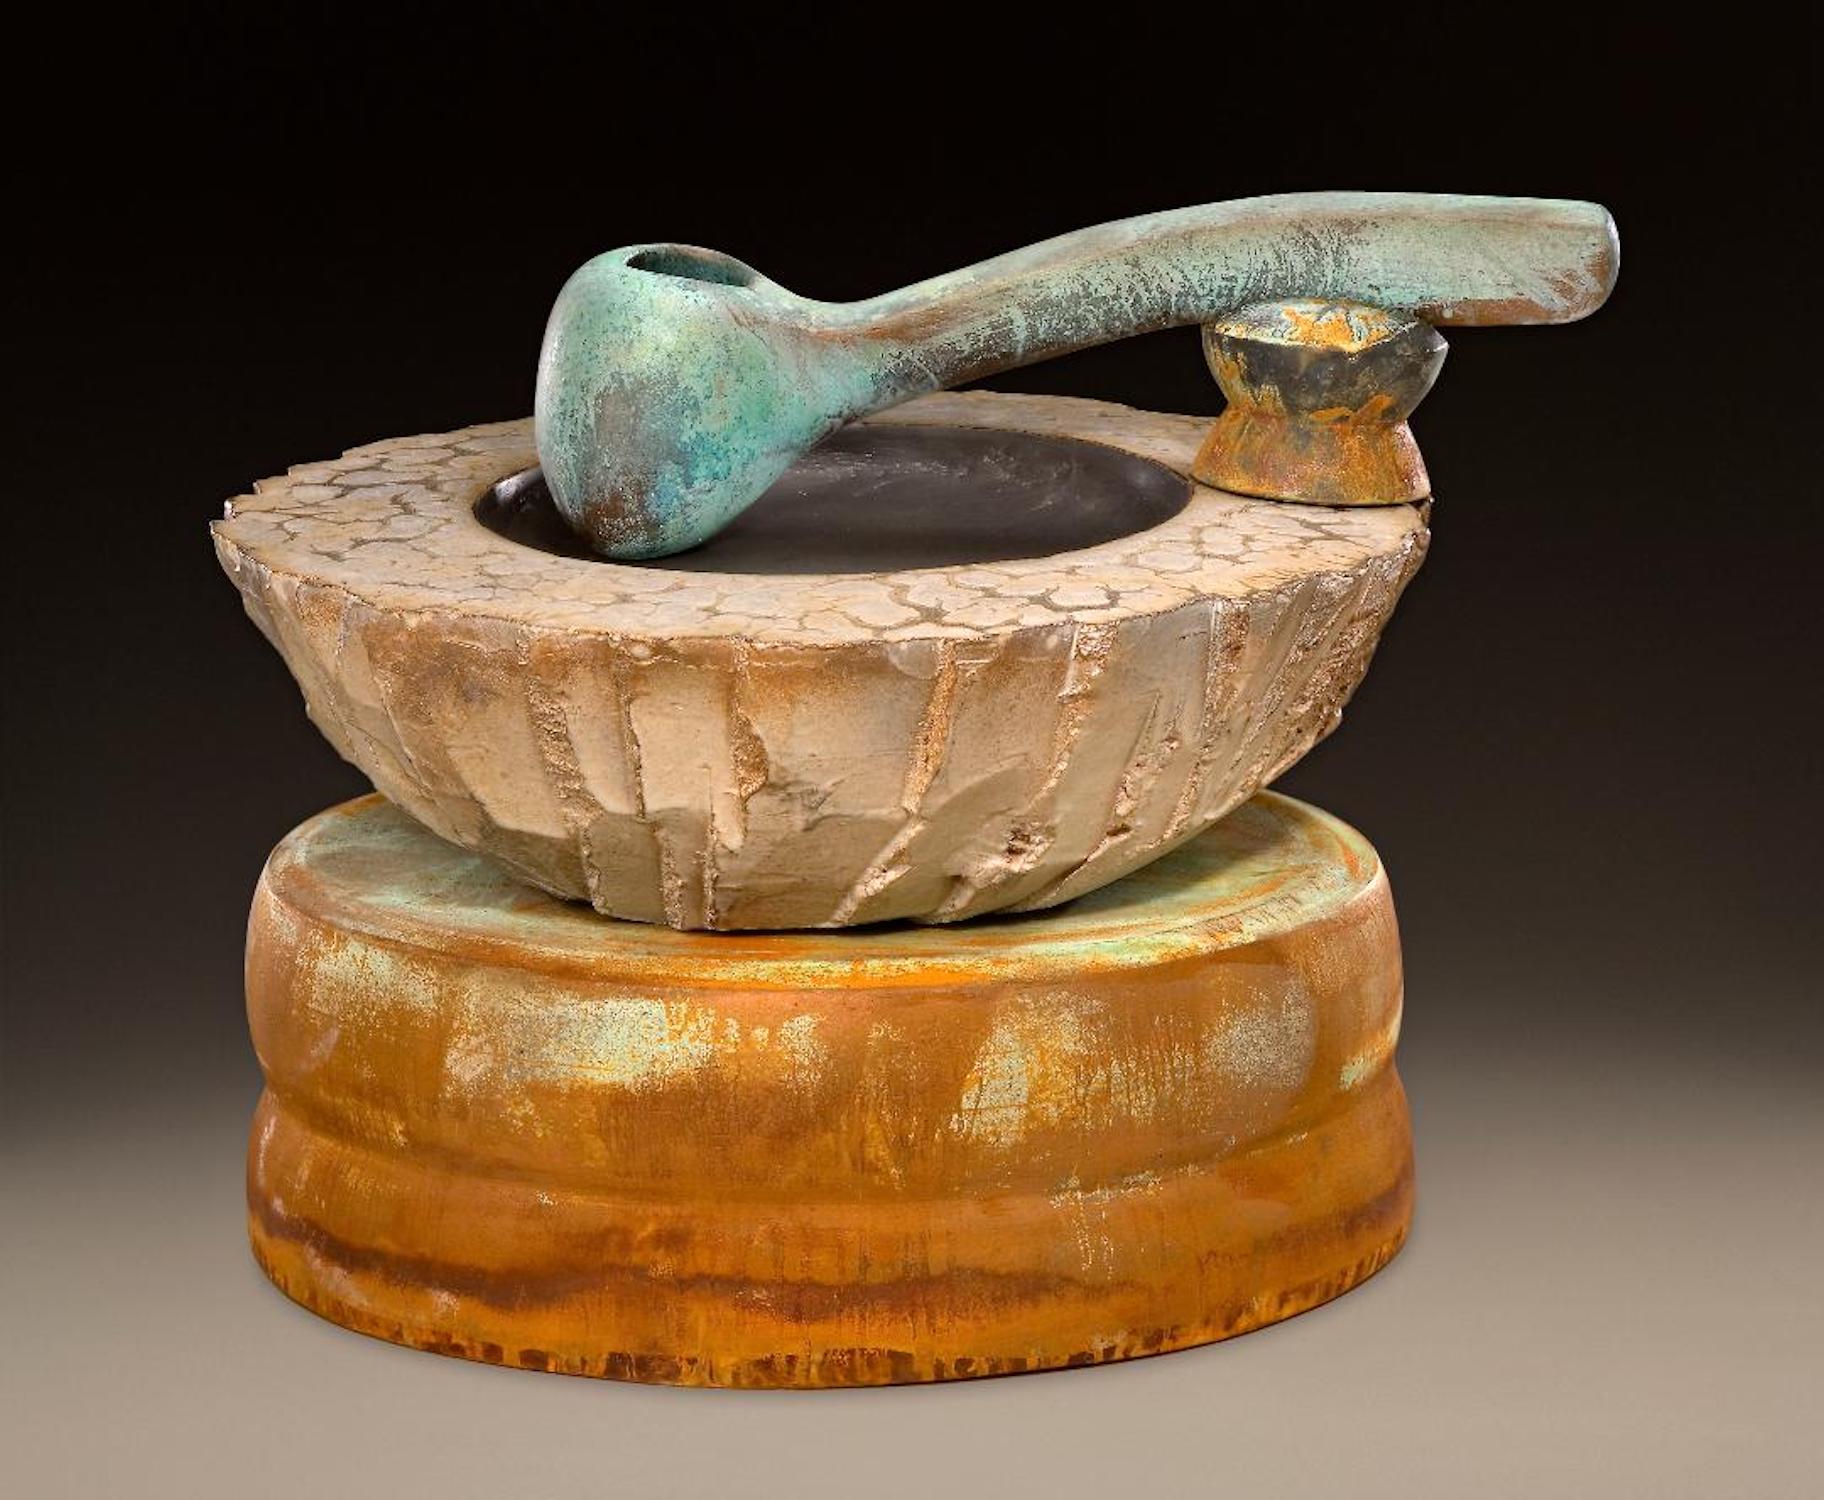 Modern Richard Hirsch Ceramic Altar Bowl with Ladle #3, 2007 For Sale